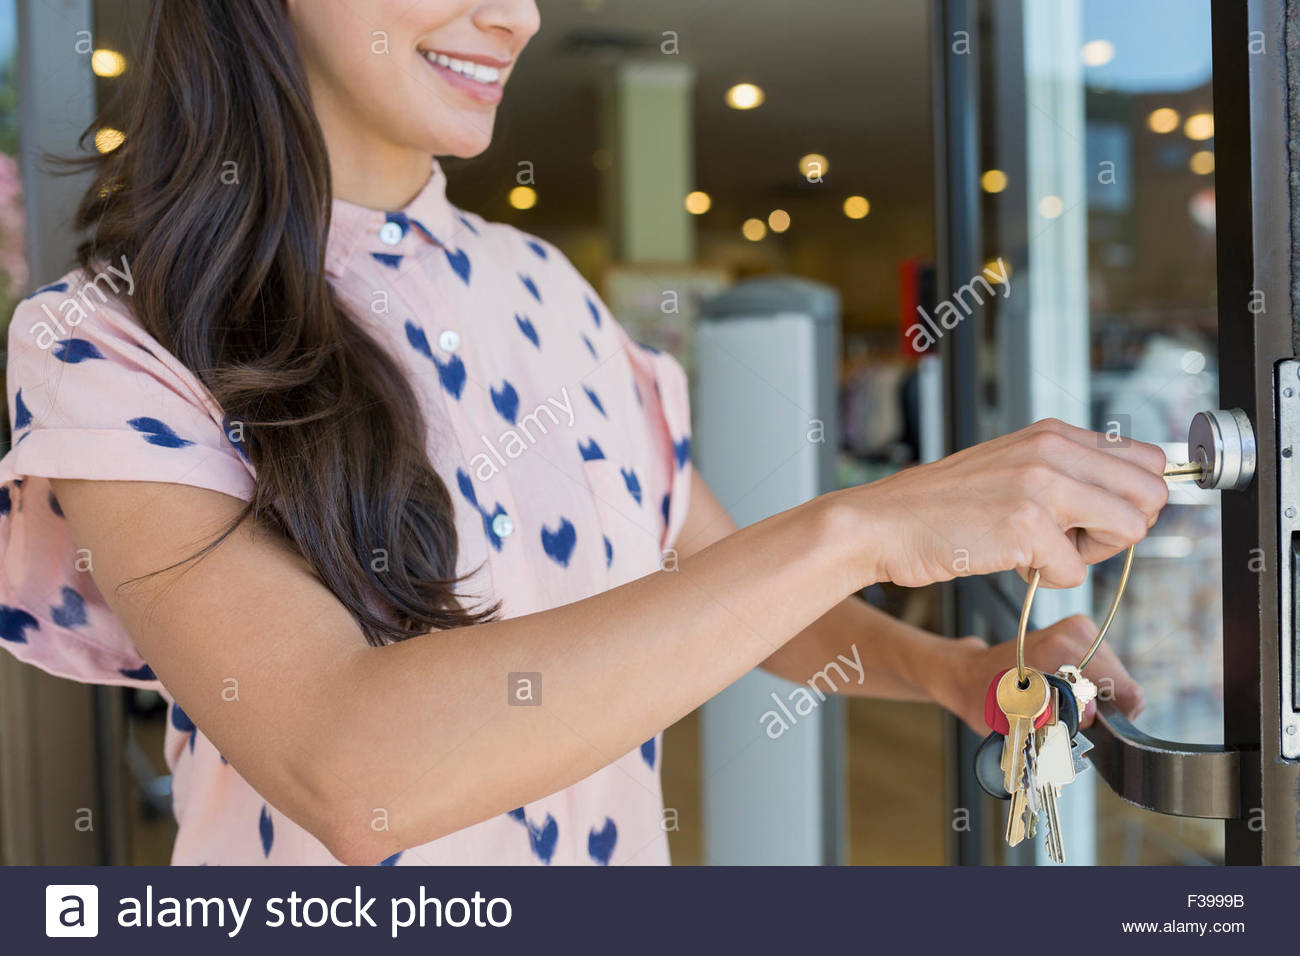 Business owner unlocking shop door with key Stock Photo